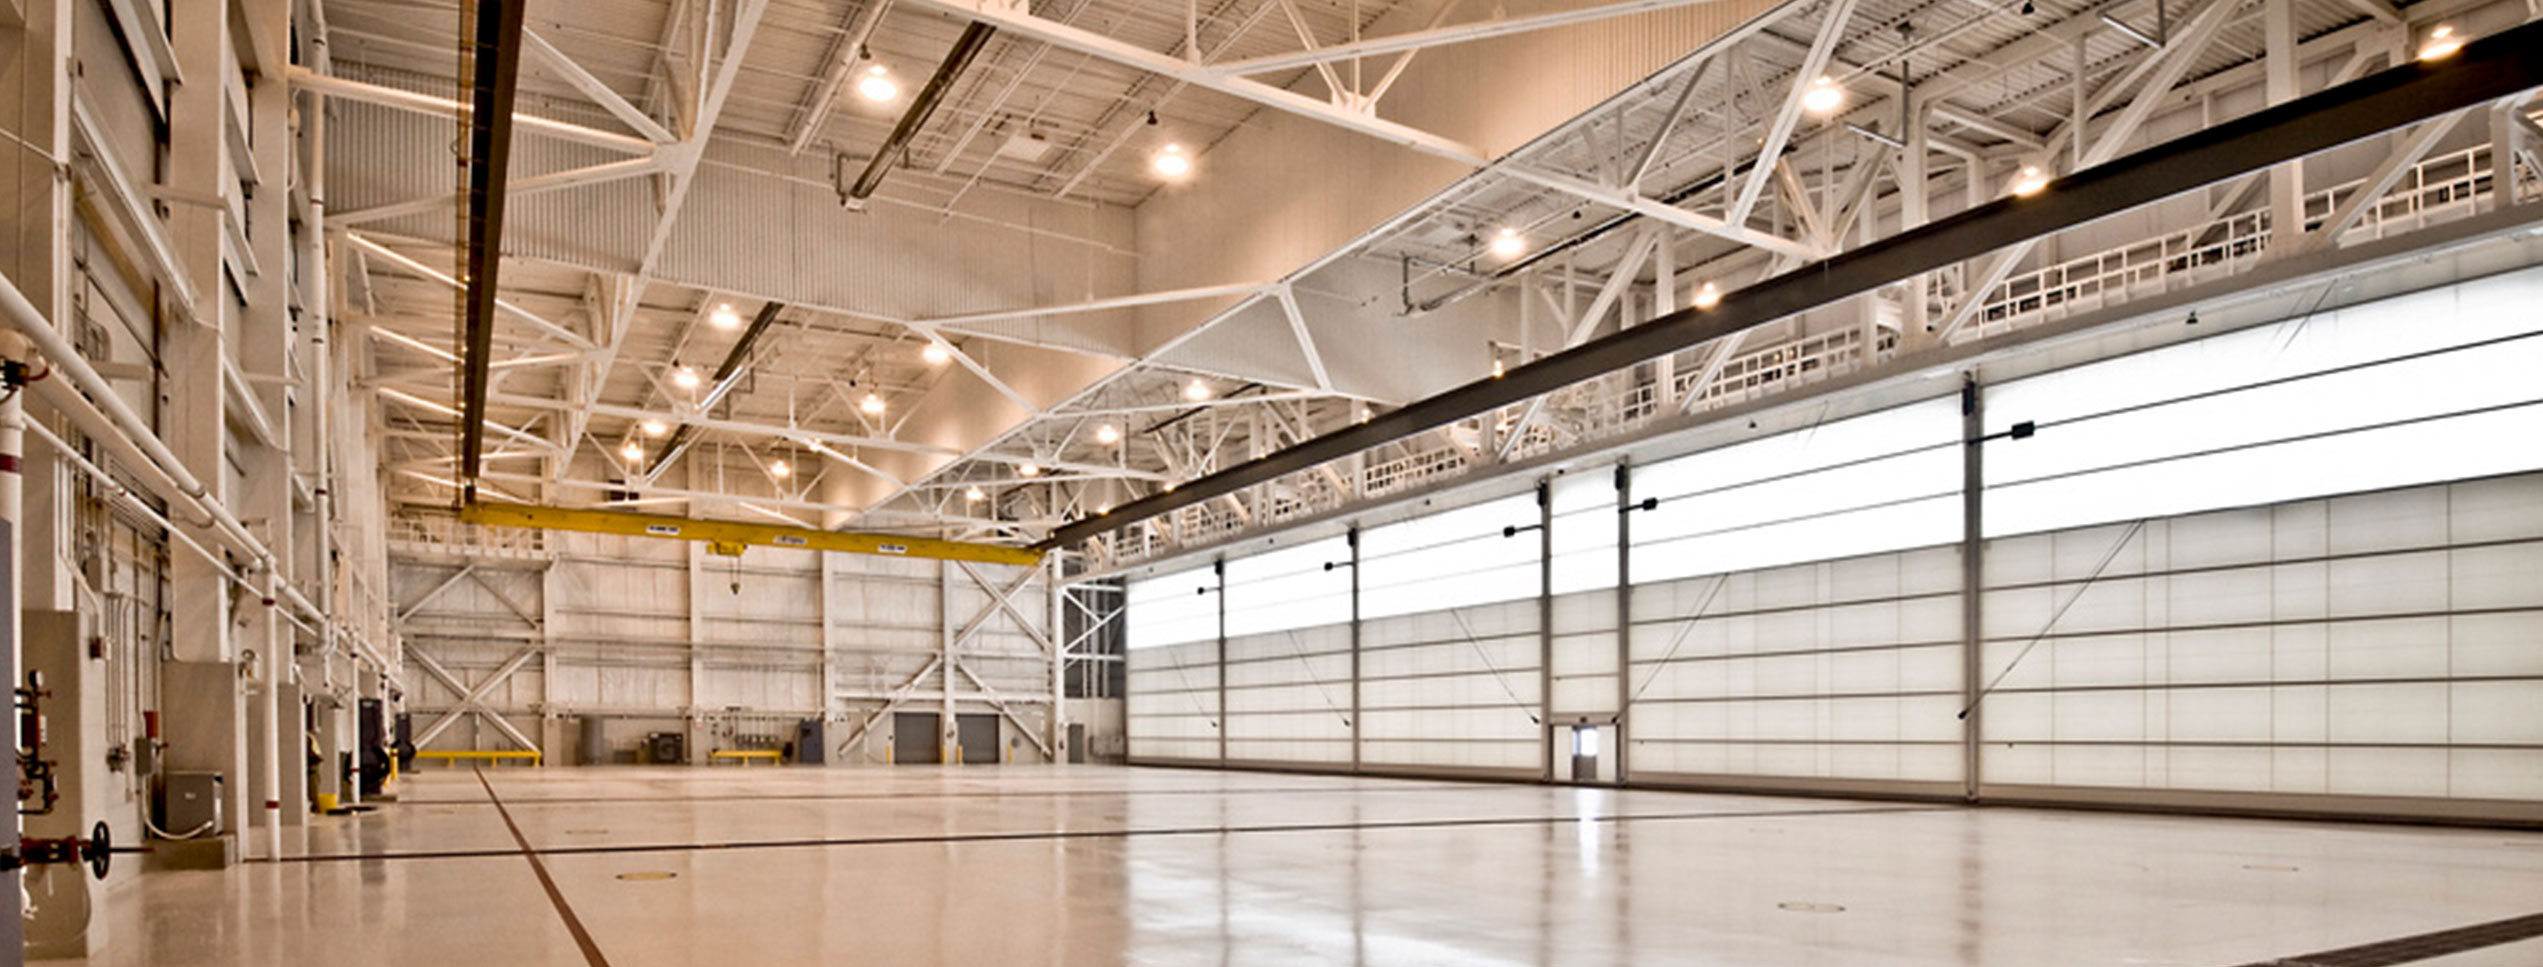 Aircraft Maintenance Hangar